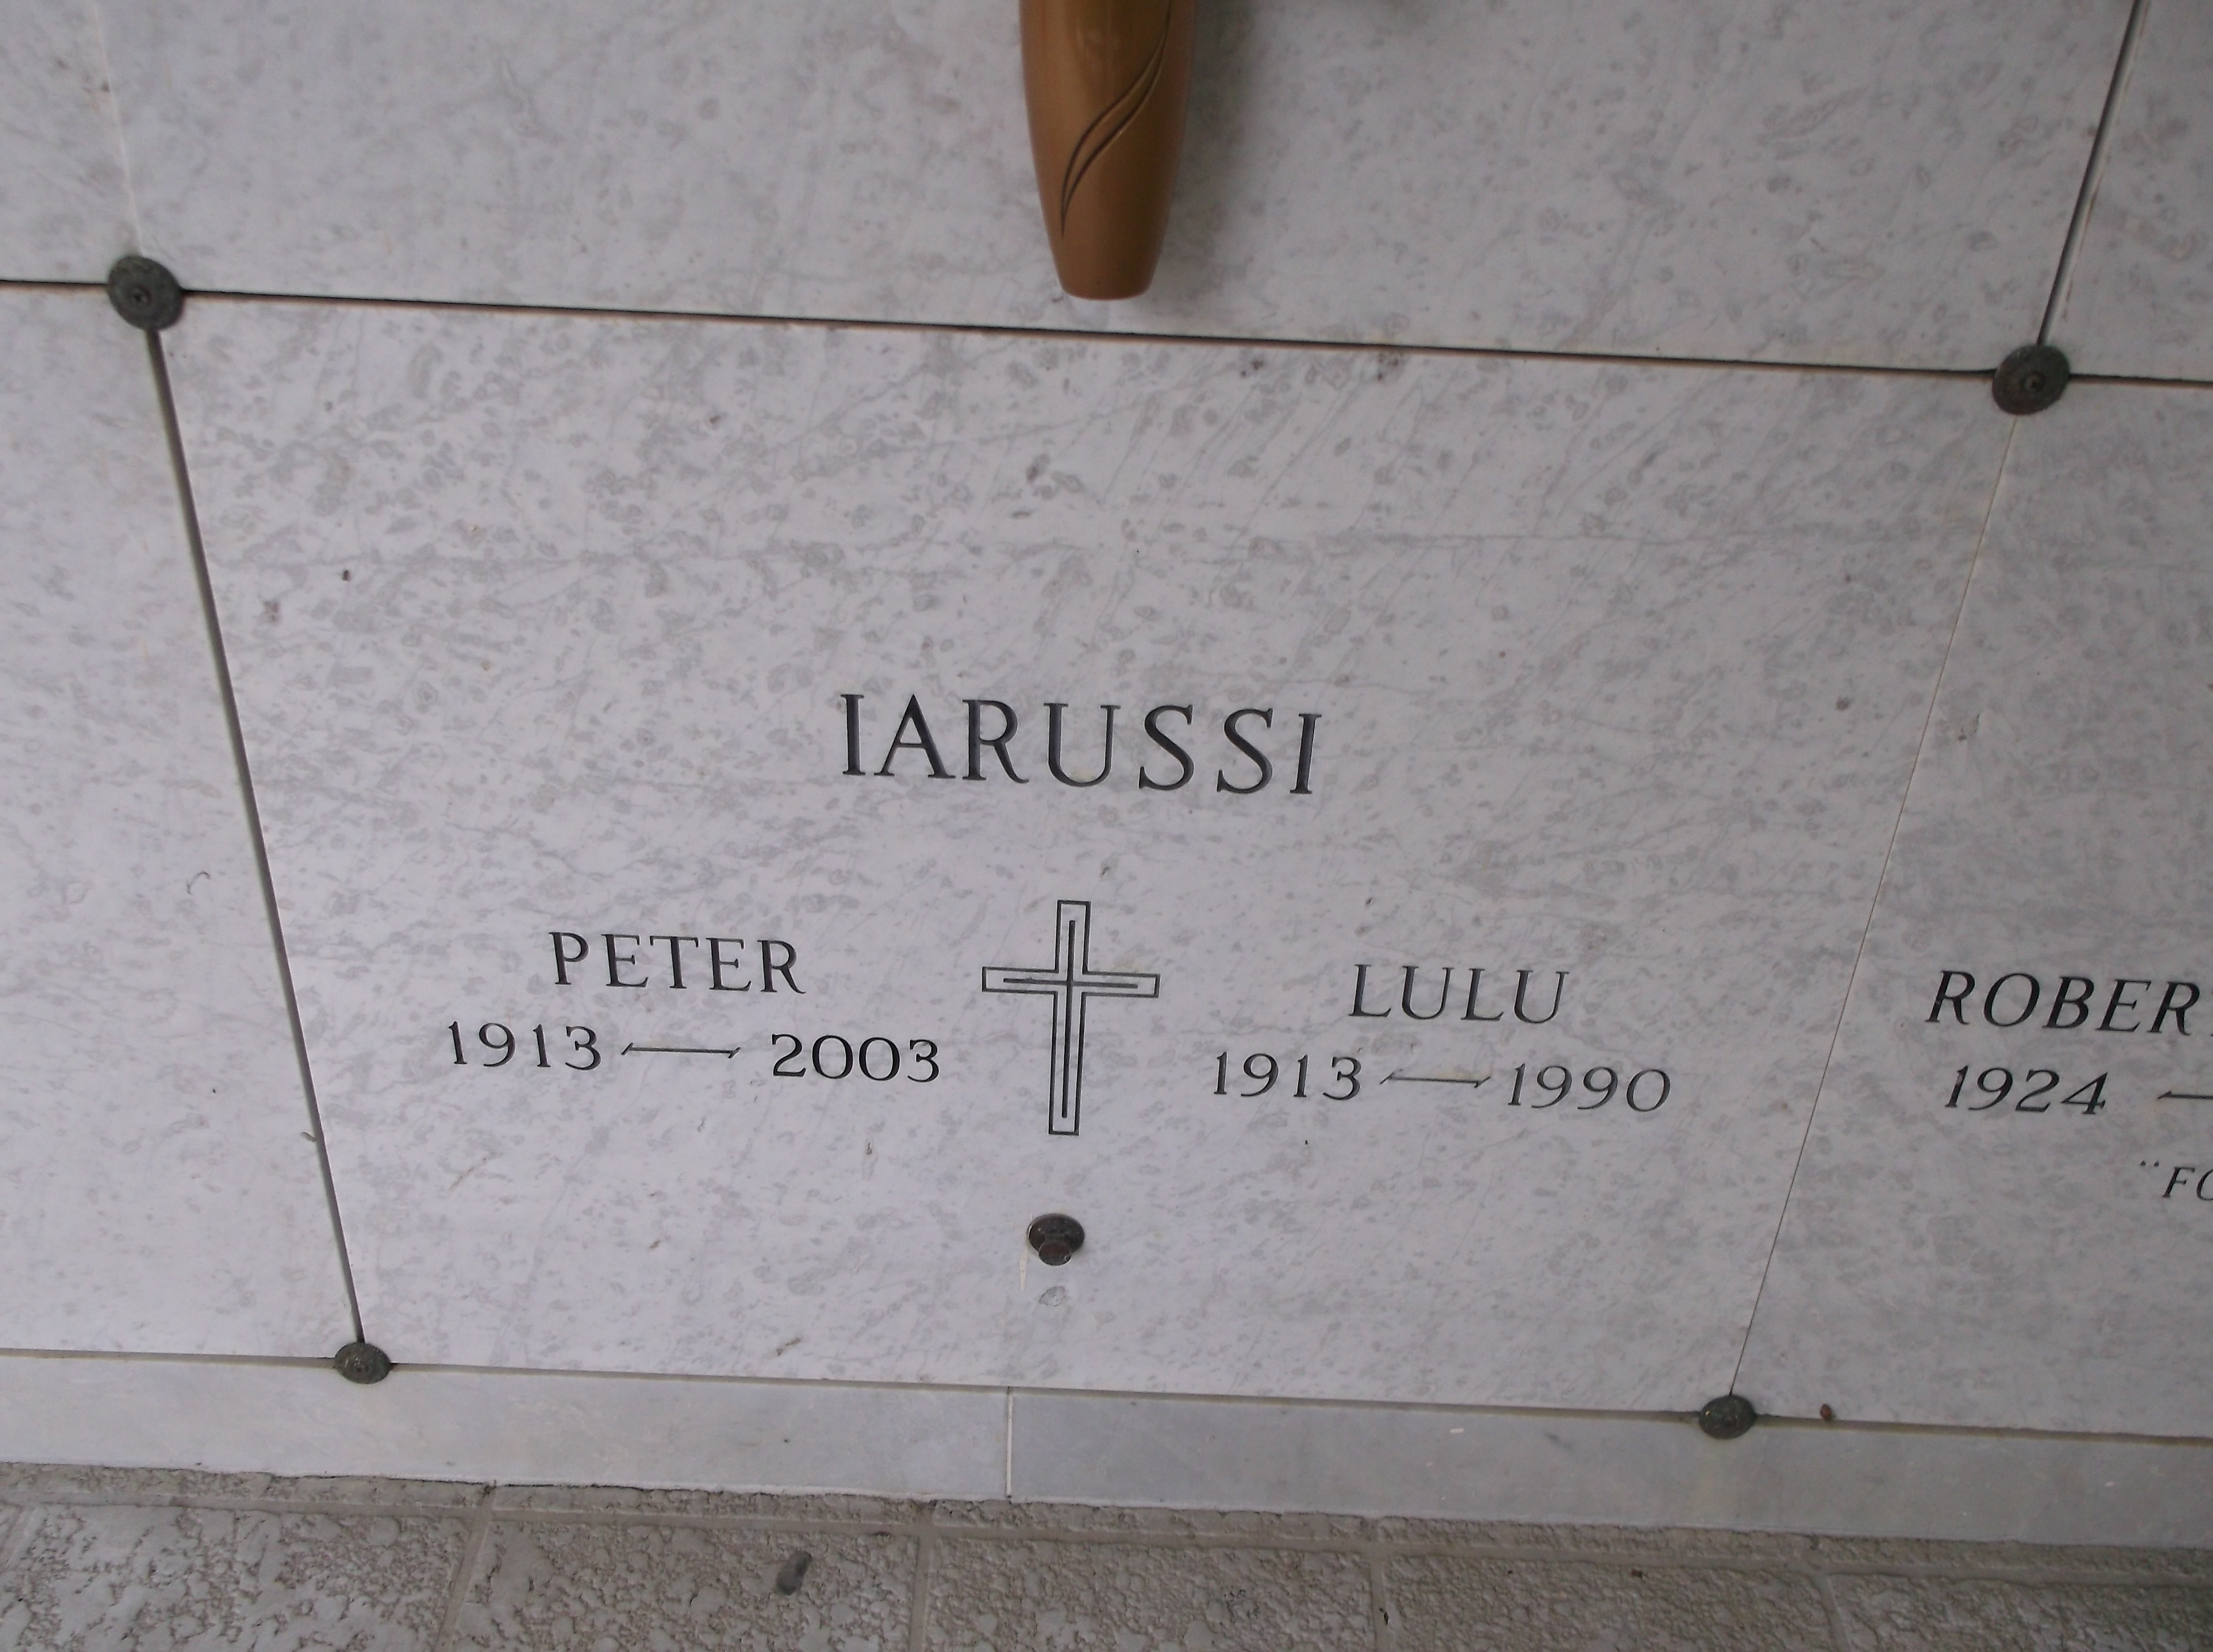 Peter Larussi